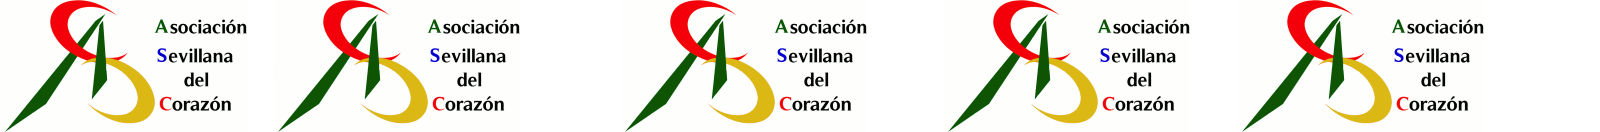 Asociación Sevillana del Corazón